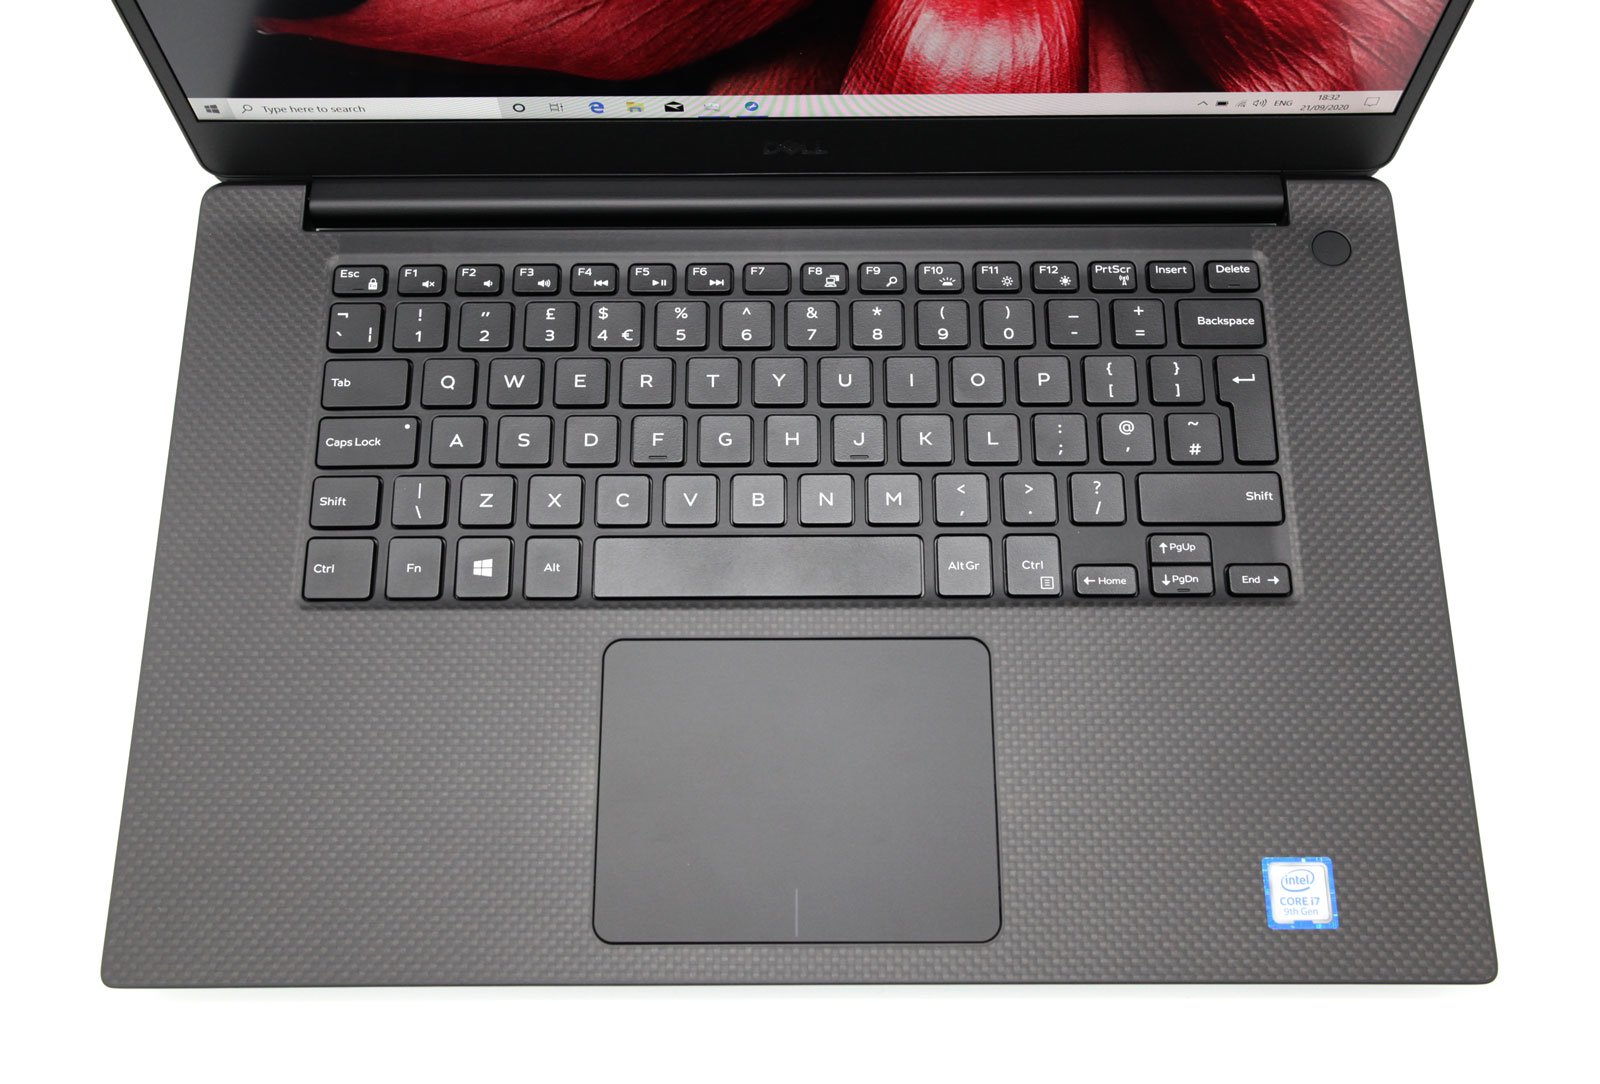 Dell XPS 15 7590 Laptop: Core i7-9750H, GTX 1650, 512GB SSD, 16GB RAM - CruiseTech